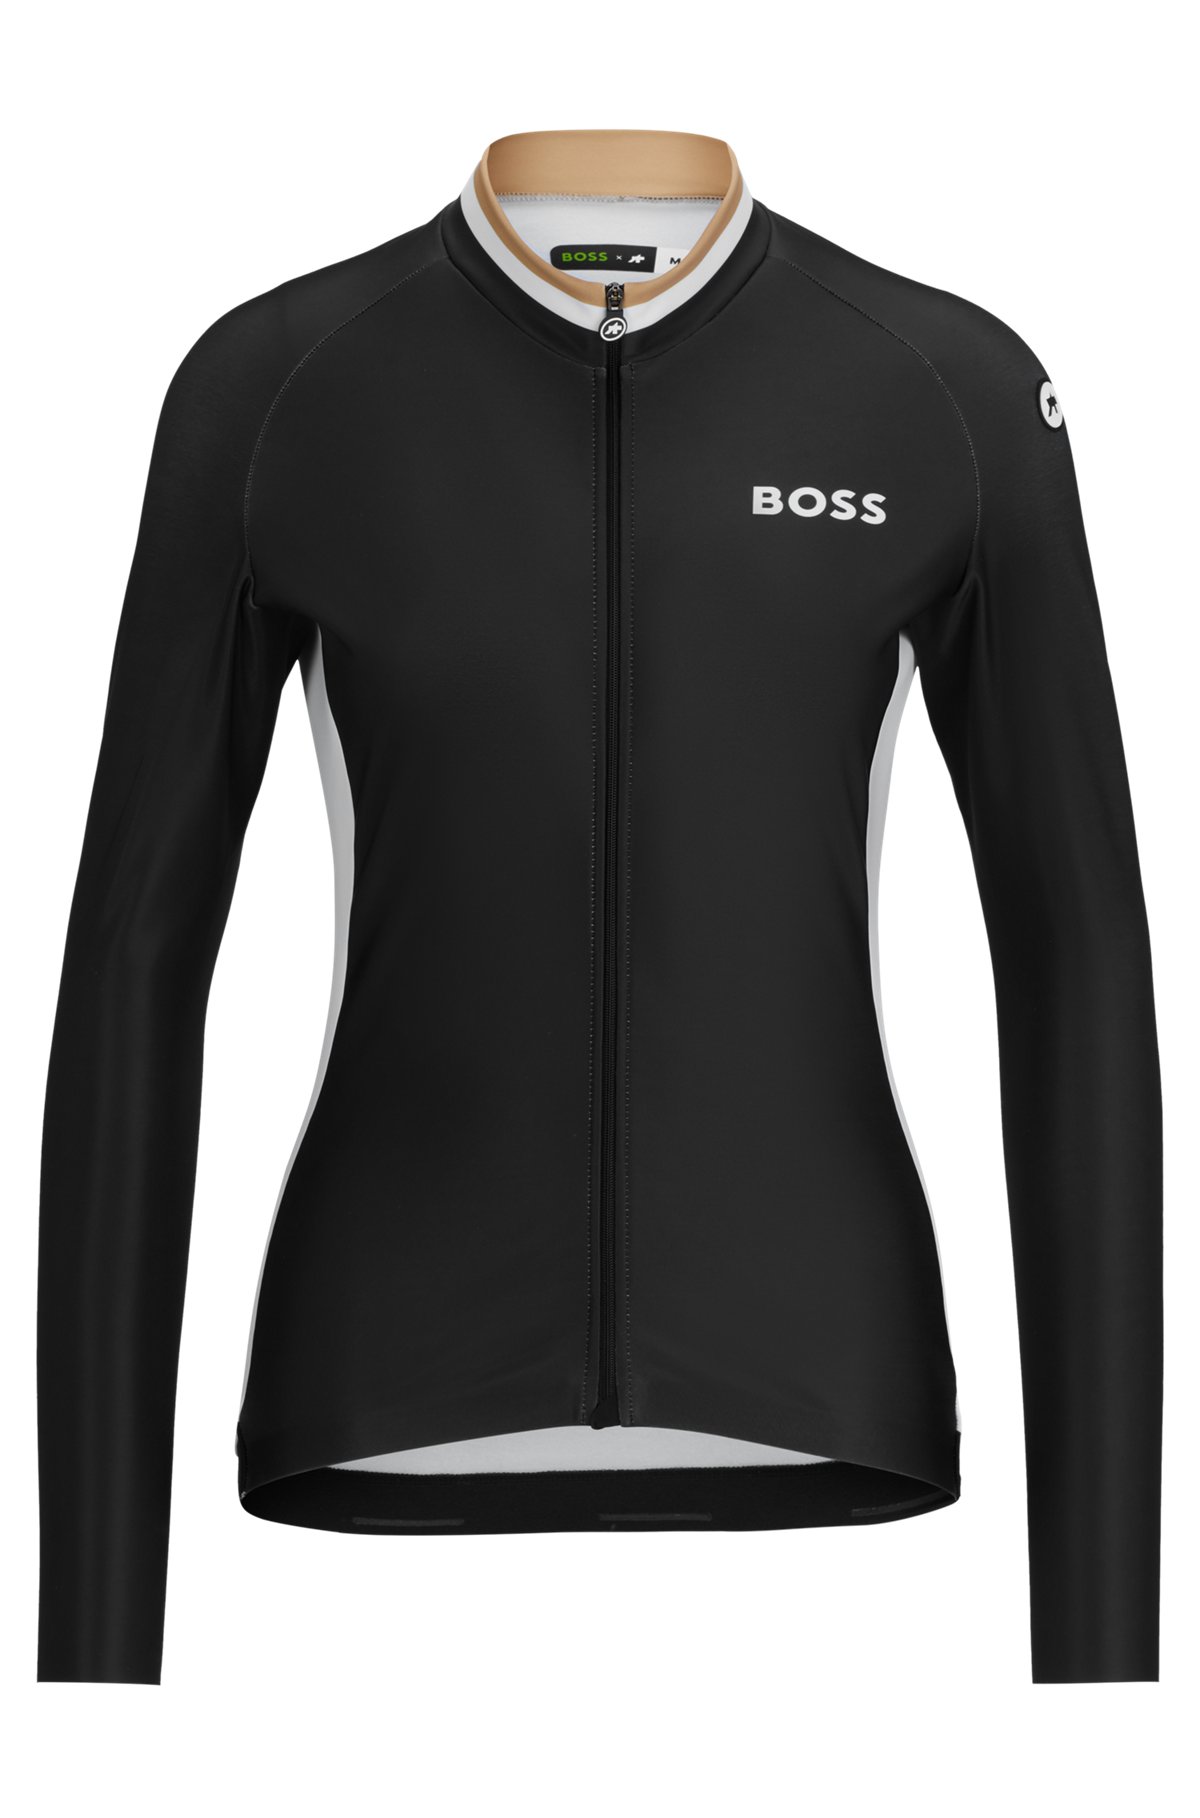 BOSS x ASSOS zip-up jersey top with three rear pockets, Black